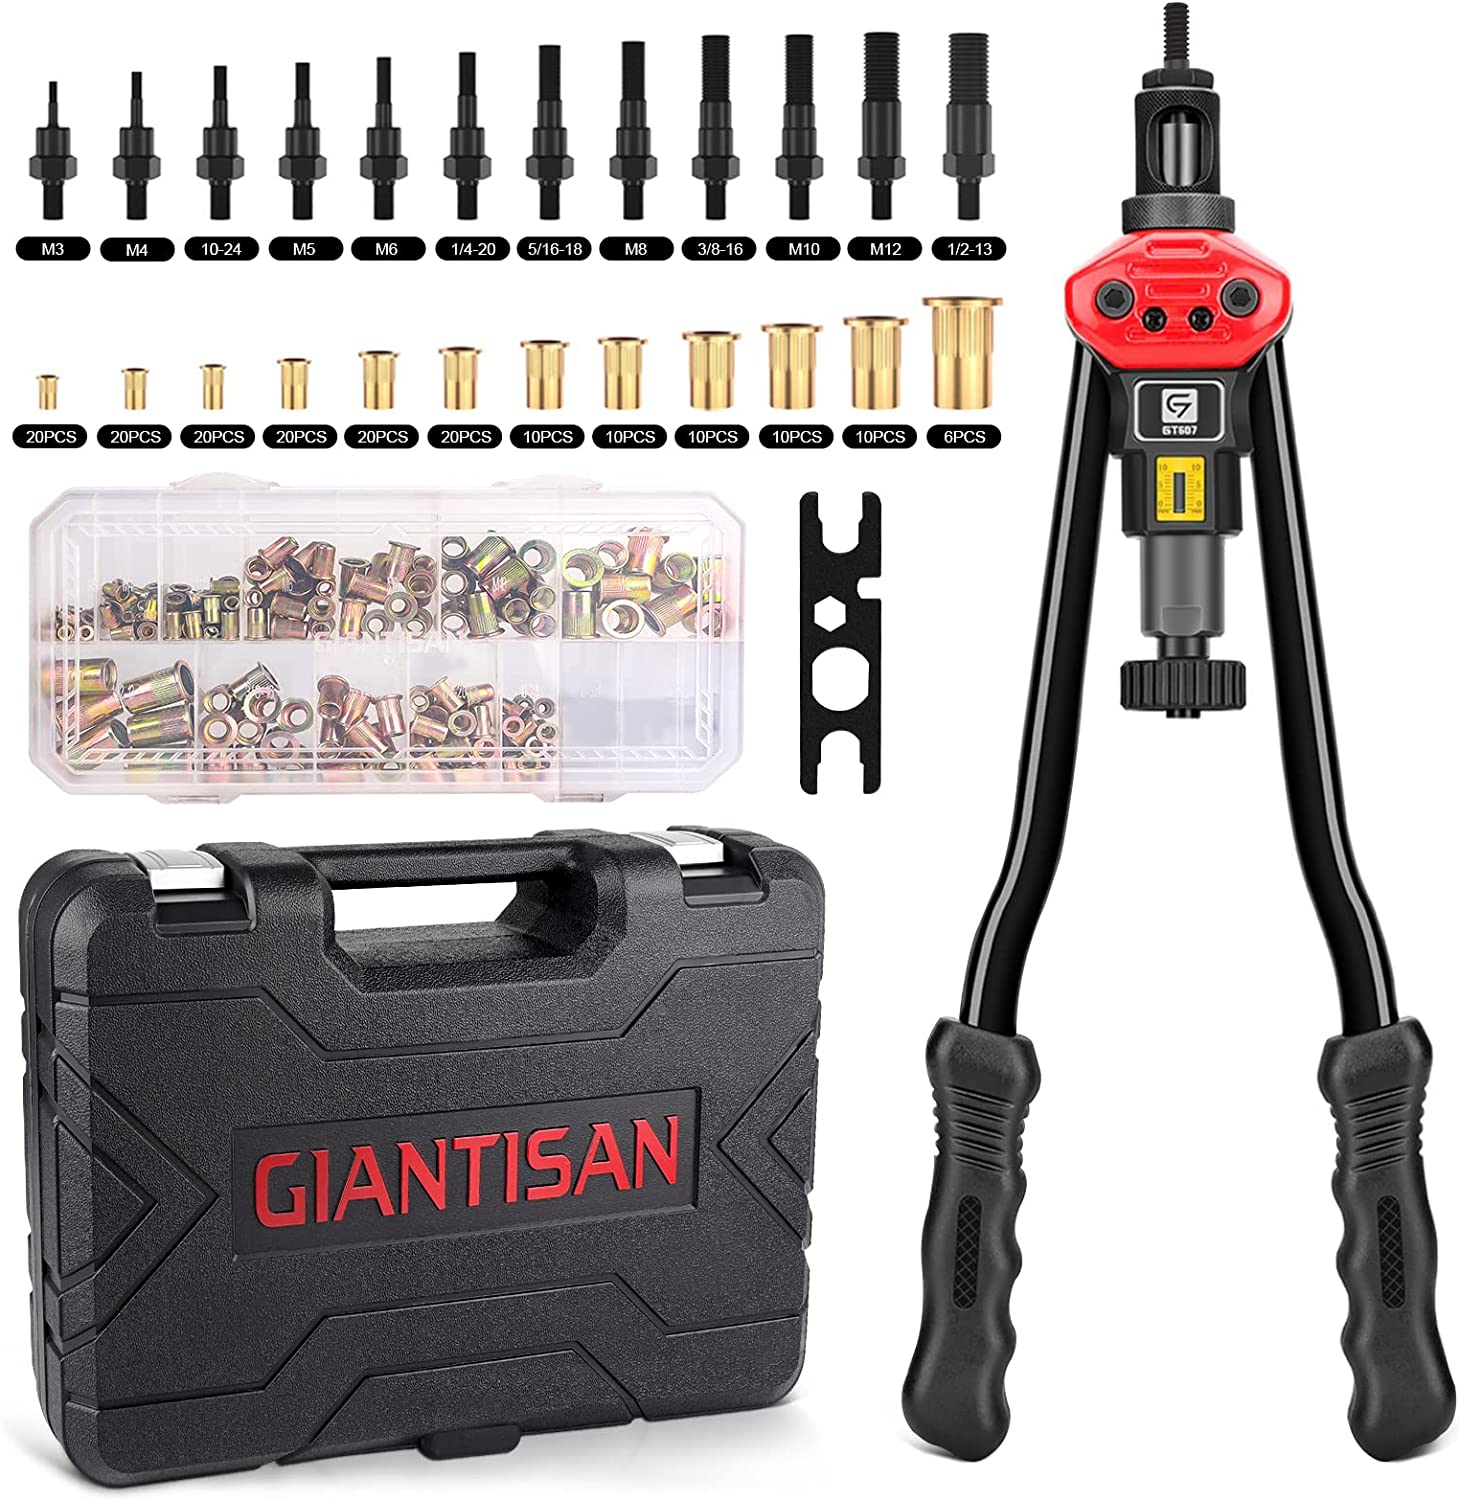 Giantisan Organizing Rivet Nut Tool Setter Kit, 176-Piece